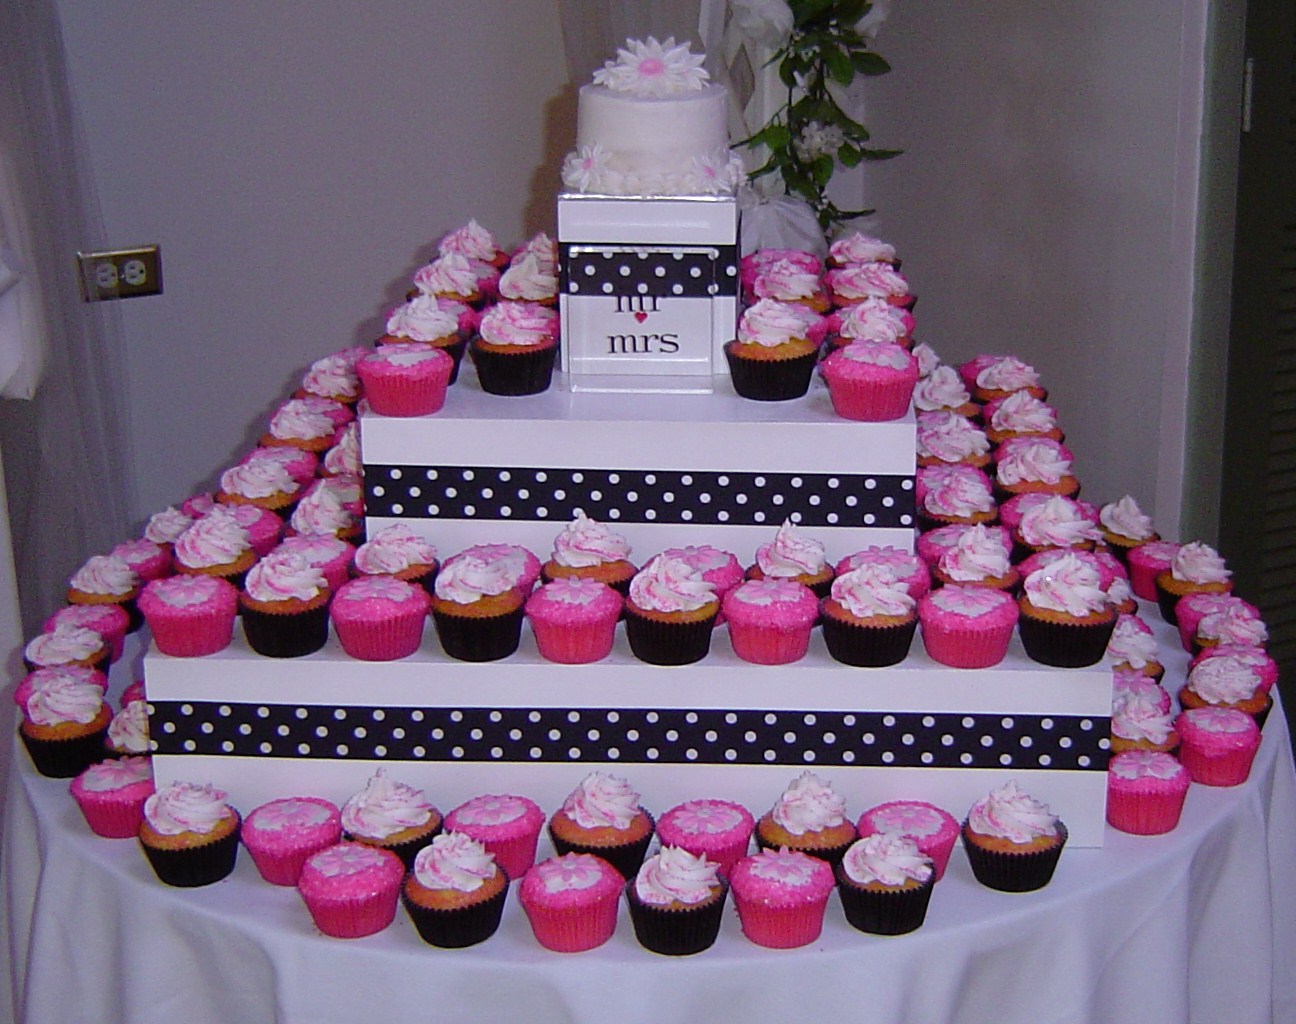 spring wedding cake ideas Wedding cupcakes turned Celebration cupcakes!